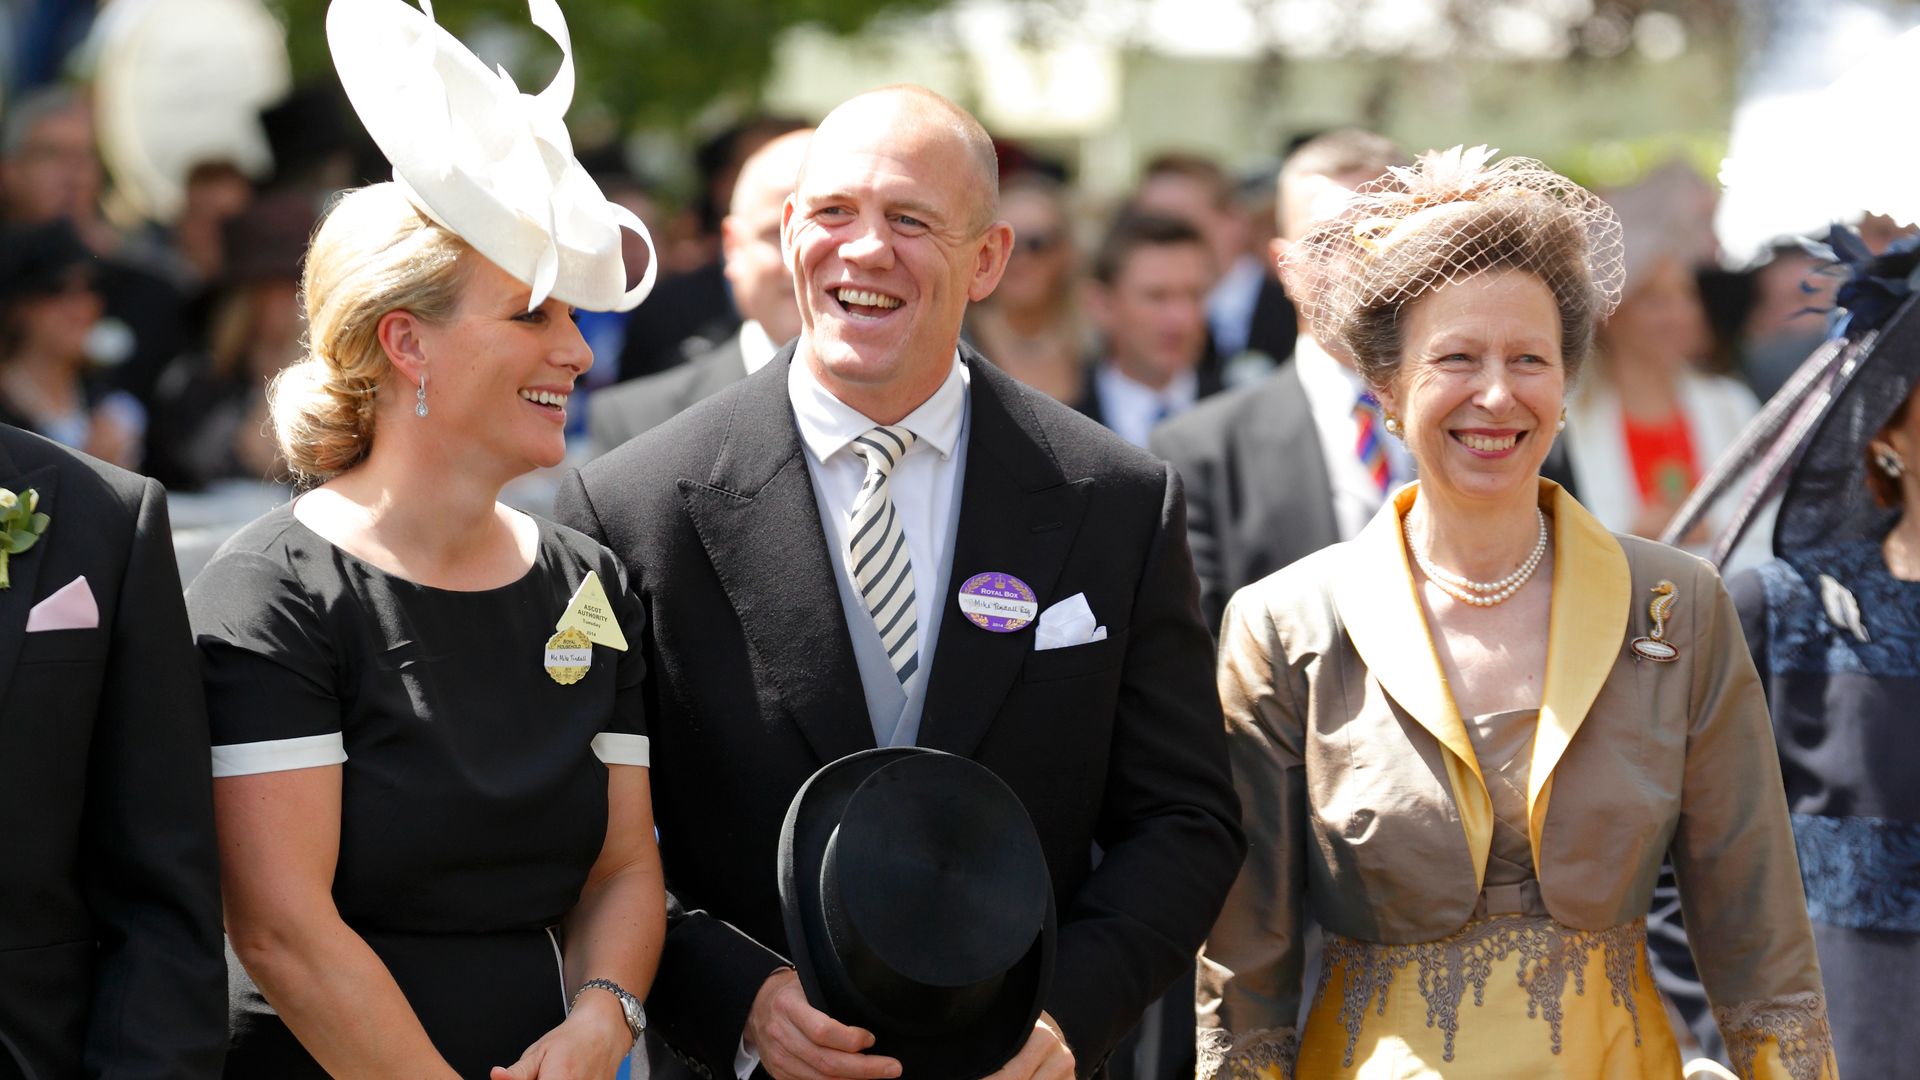 Mike and Zara Tindall and Princess Anne laughing at Royal Ascot 2014